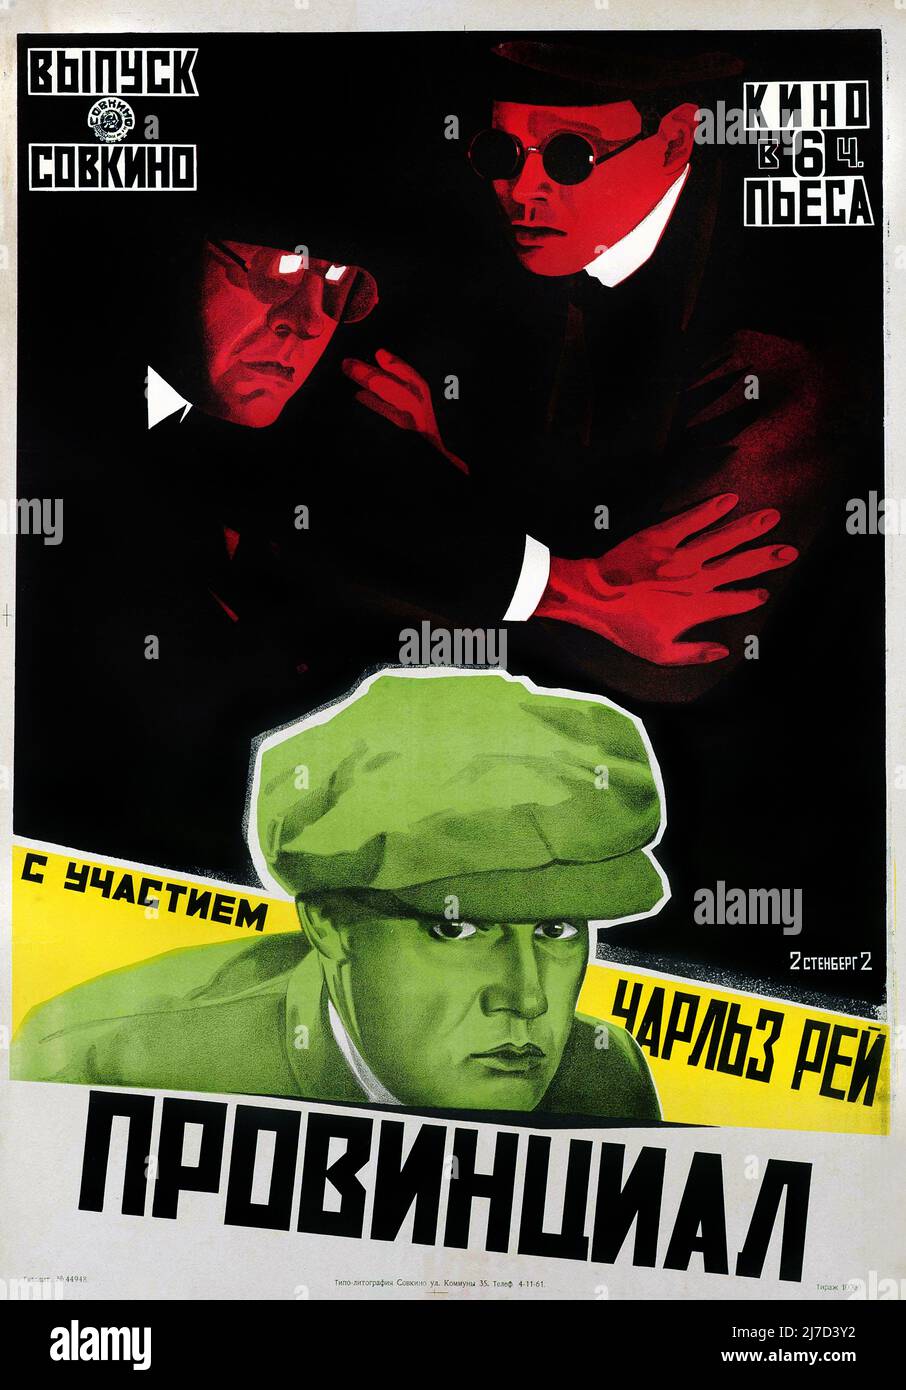 Vintage 1920s Soviet Avant-Garde Film Poster for : THE PROVINCIAL -  Poster by Stenberg Brothers - Vladimir Stenberg, Georgii Stenberg Stock Photo